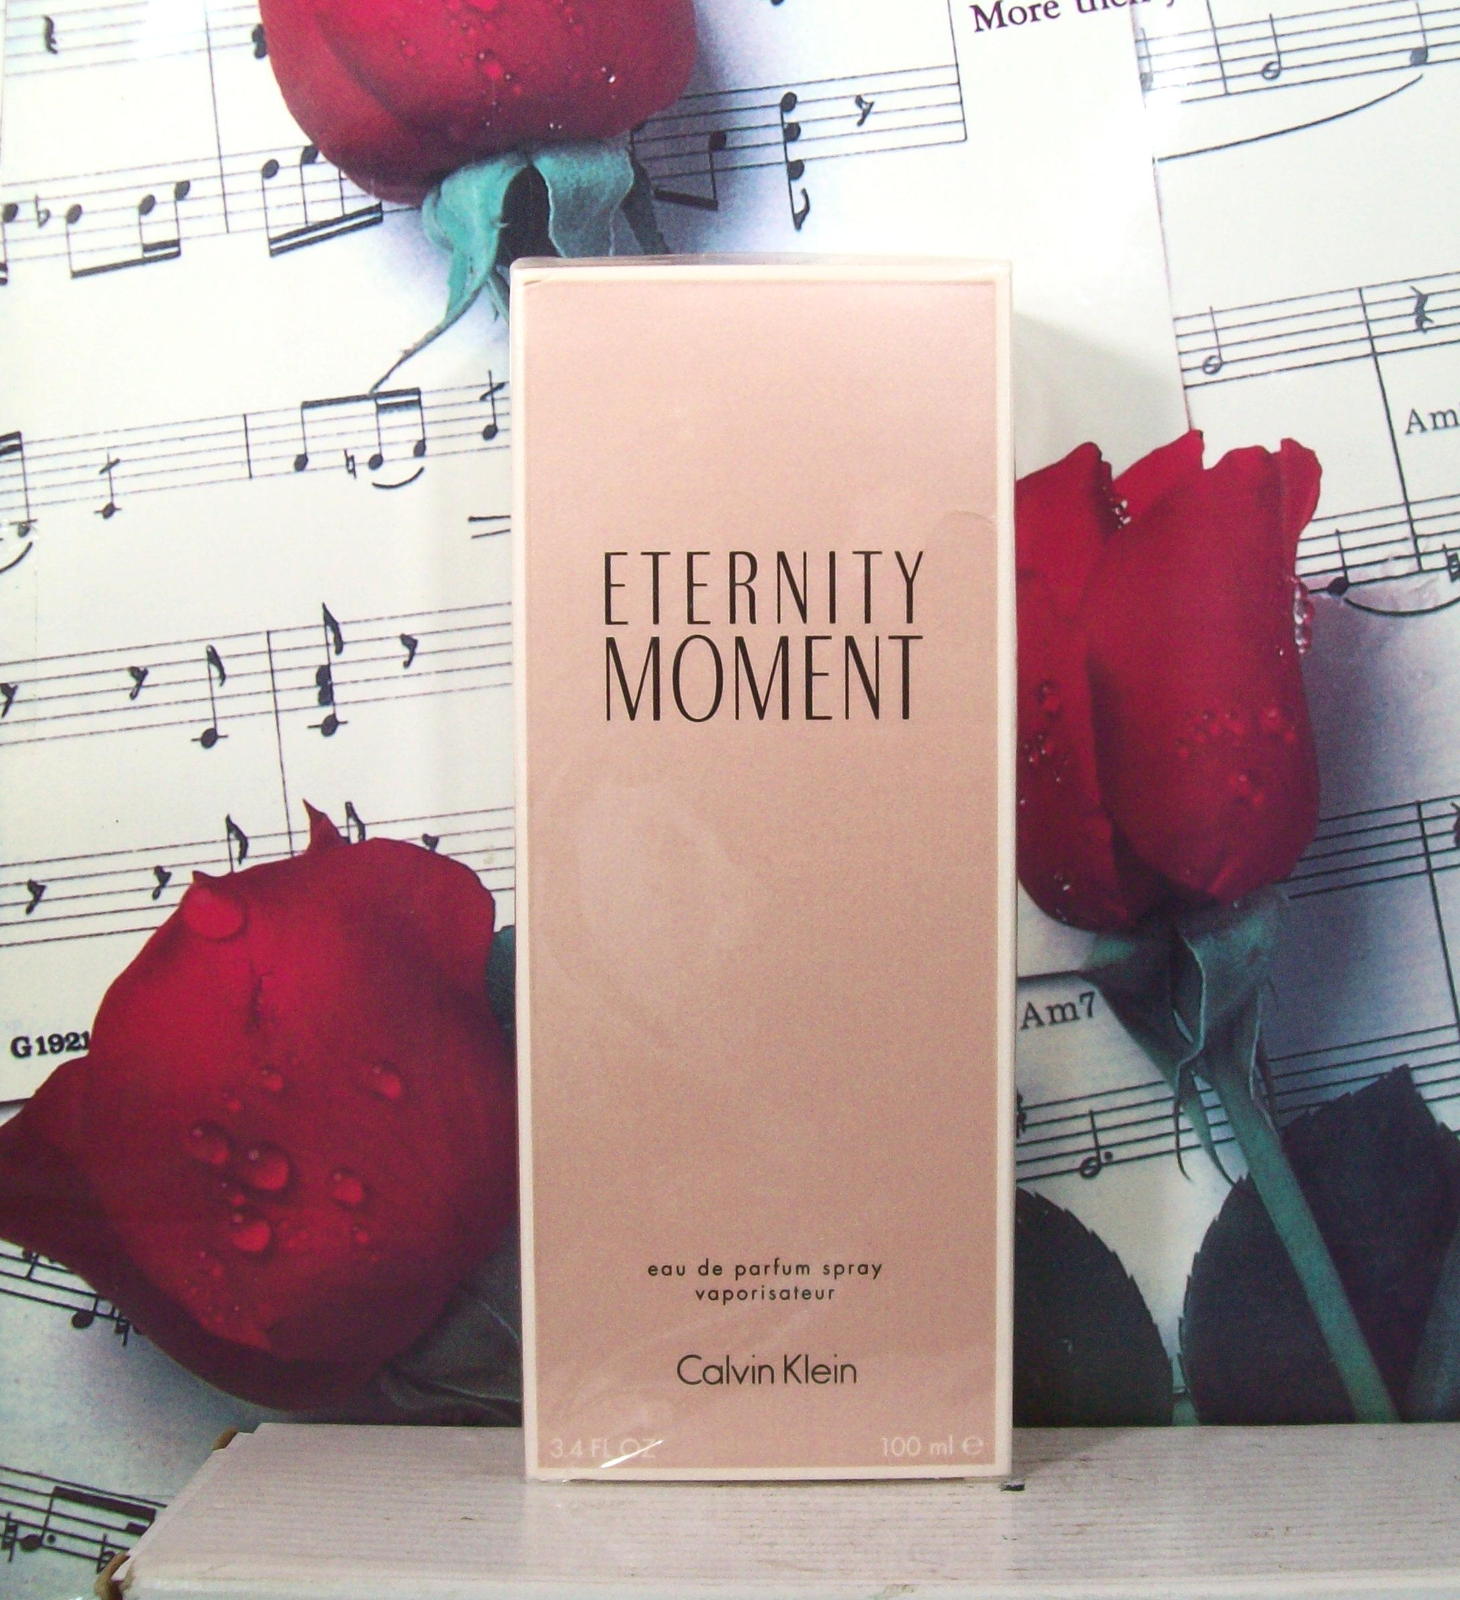 Calvin Klein Eternity Moment EDP Spray 3.4 FL. OZ. - $49.99